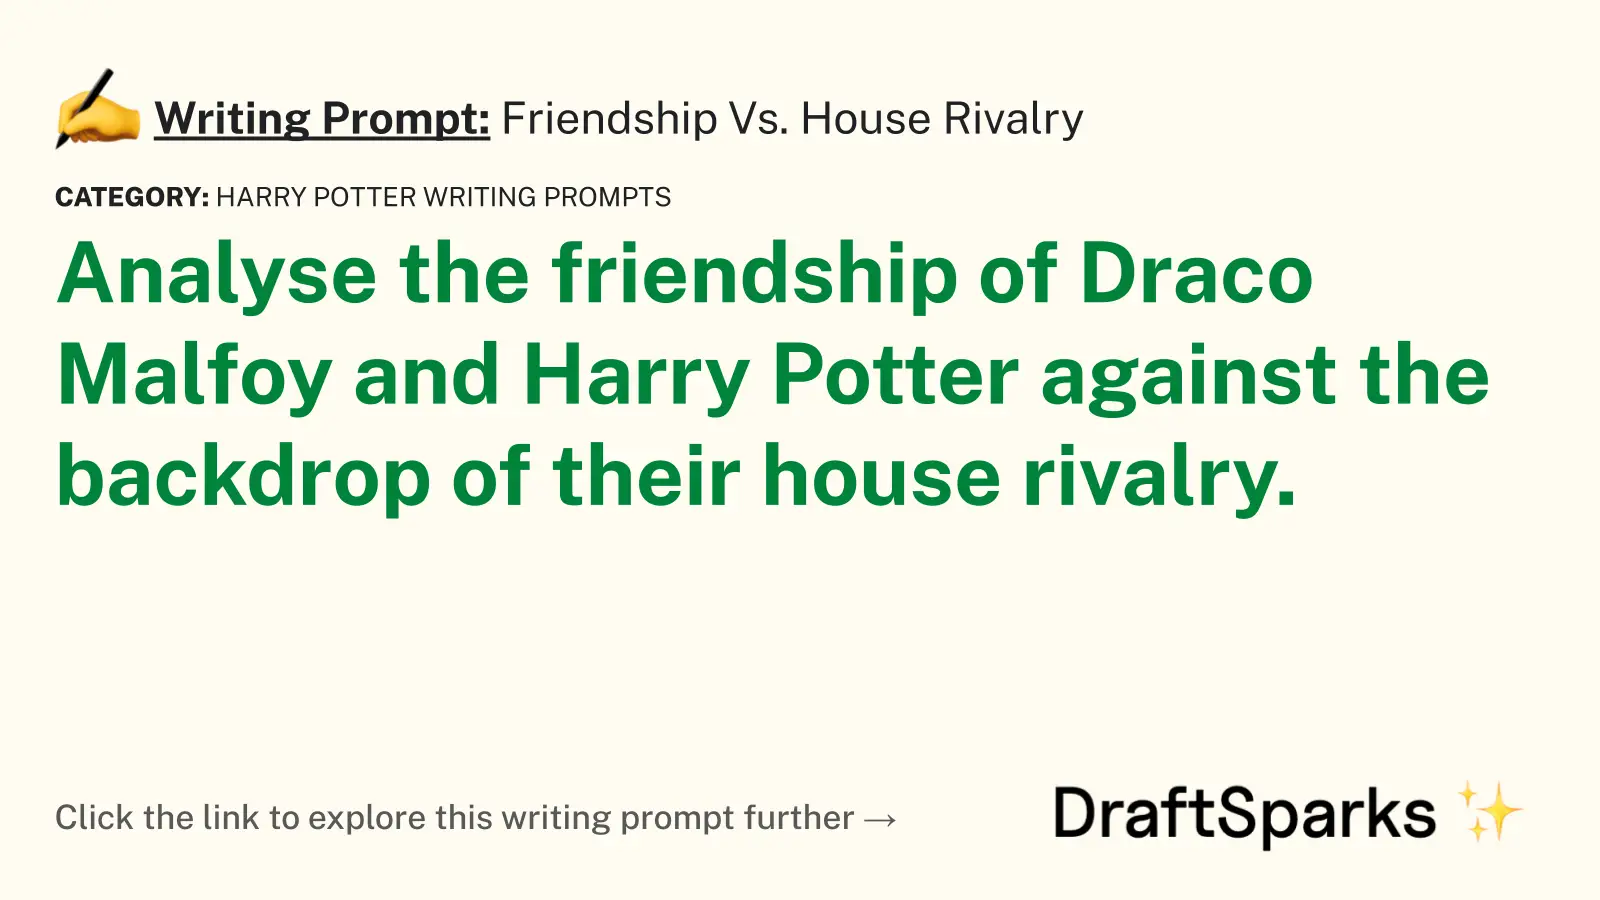 Friendship Vs. House Rivalry